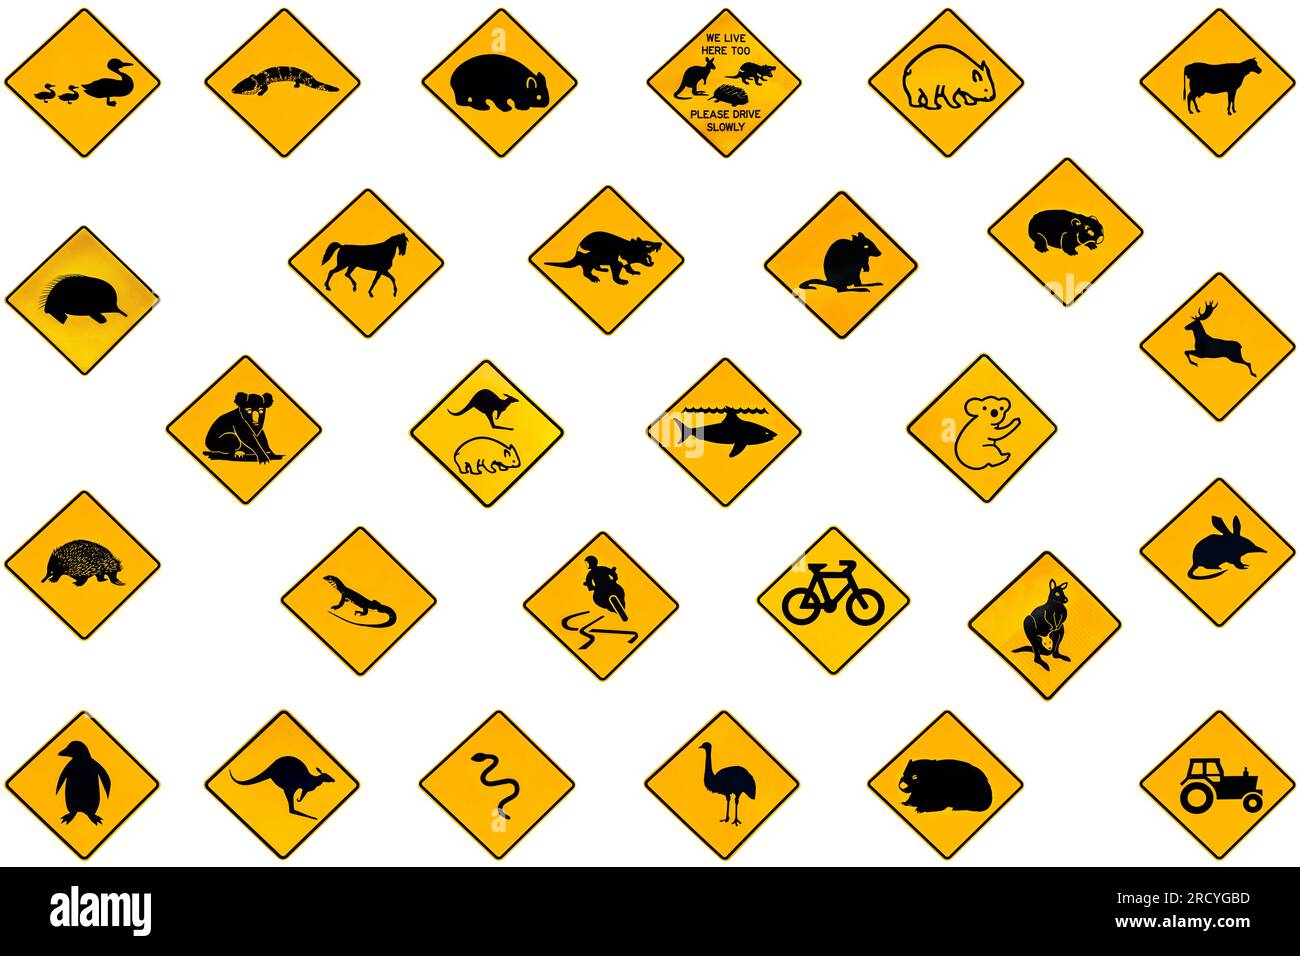 Australian warning road signs from Australia highways. Wildlife animals: Emu, Echidna, Tasmanian Devil, Wombat, Kangaroo, Penguin, Shark, Ducks Snake Stock Photo